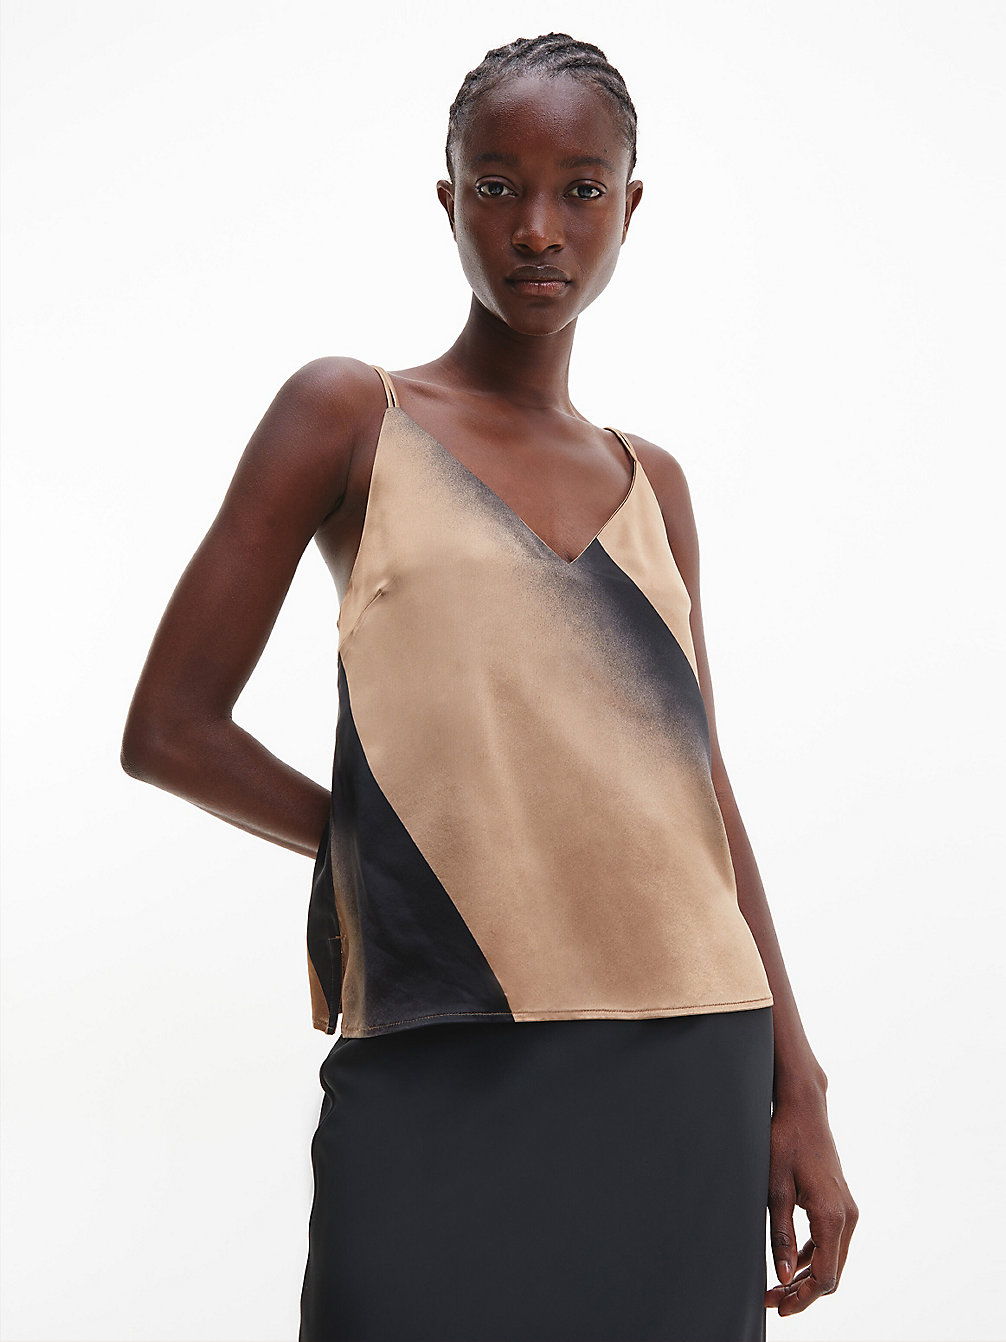 ARCHITECTURAL SPRAY / SAFARI CANVAS Shadow Print Cami Top undefined women Calvin Klein